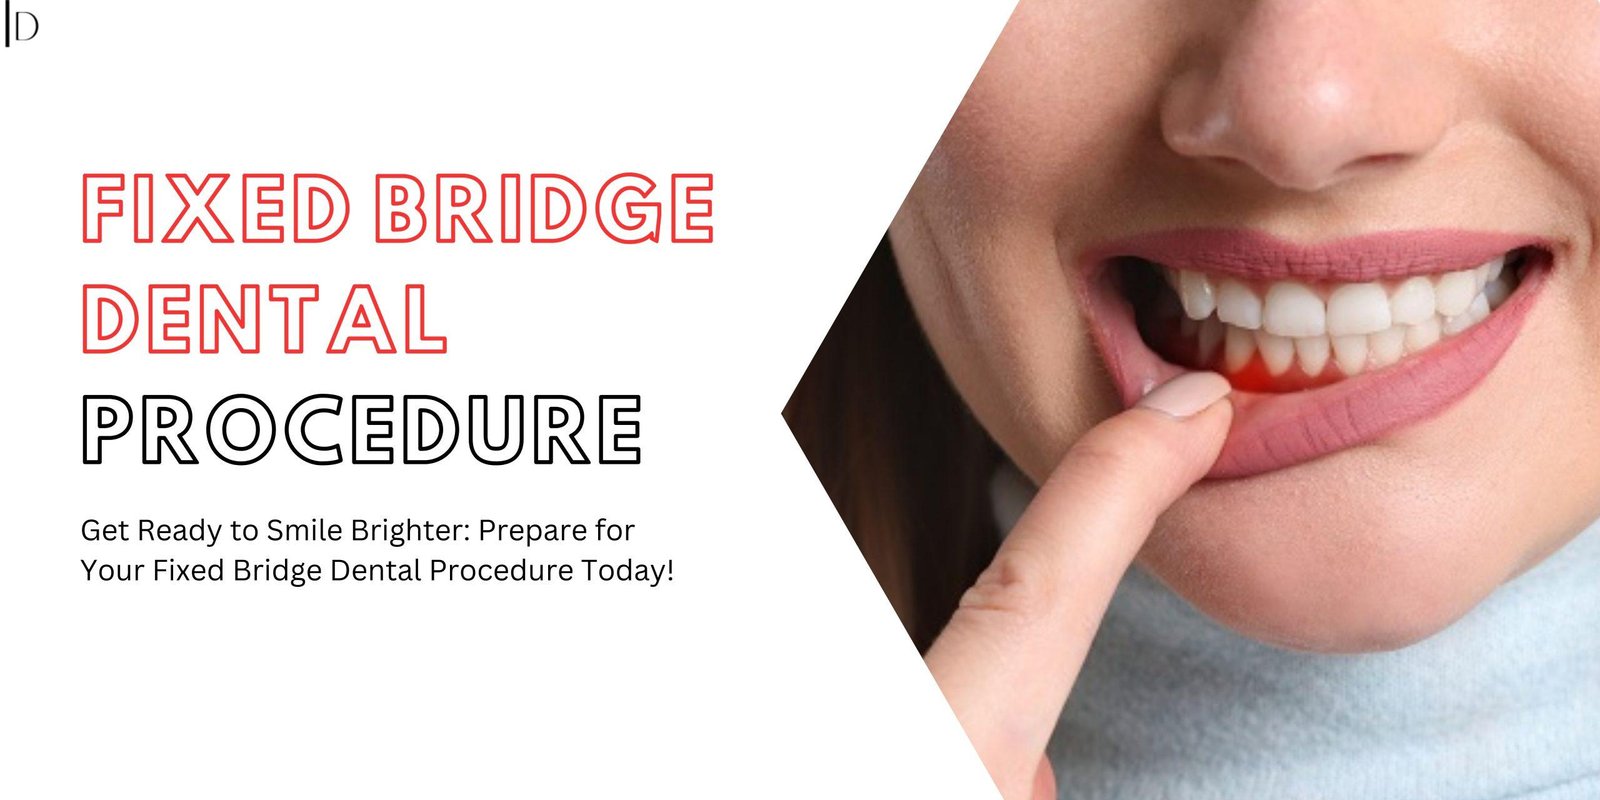 How to Prepare for a Fixed Bridge Dental Procedure